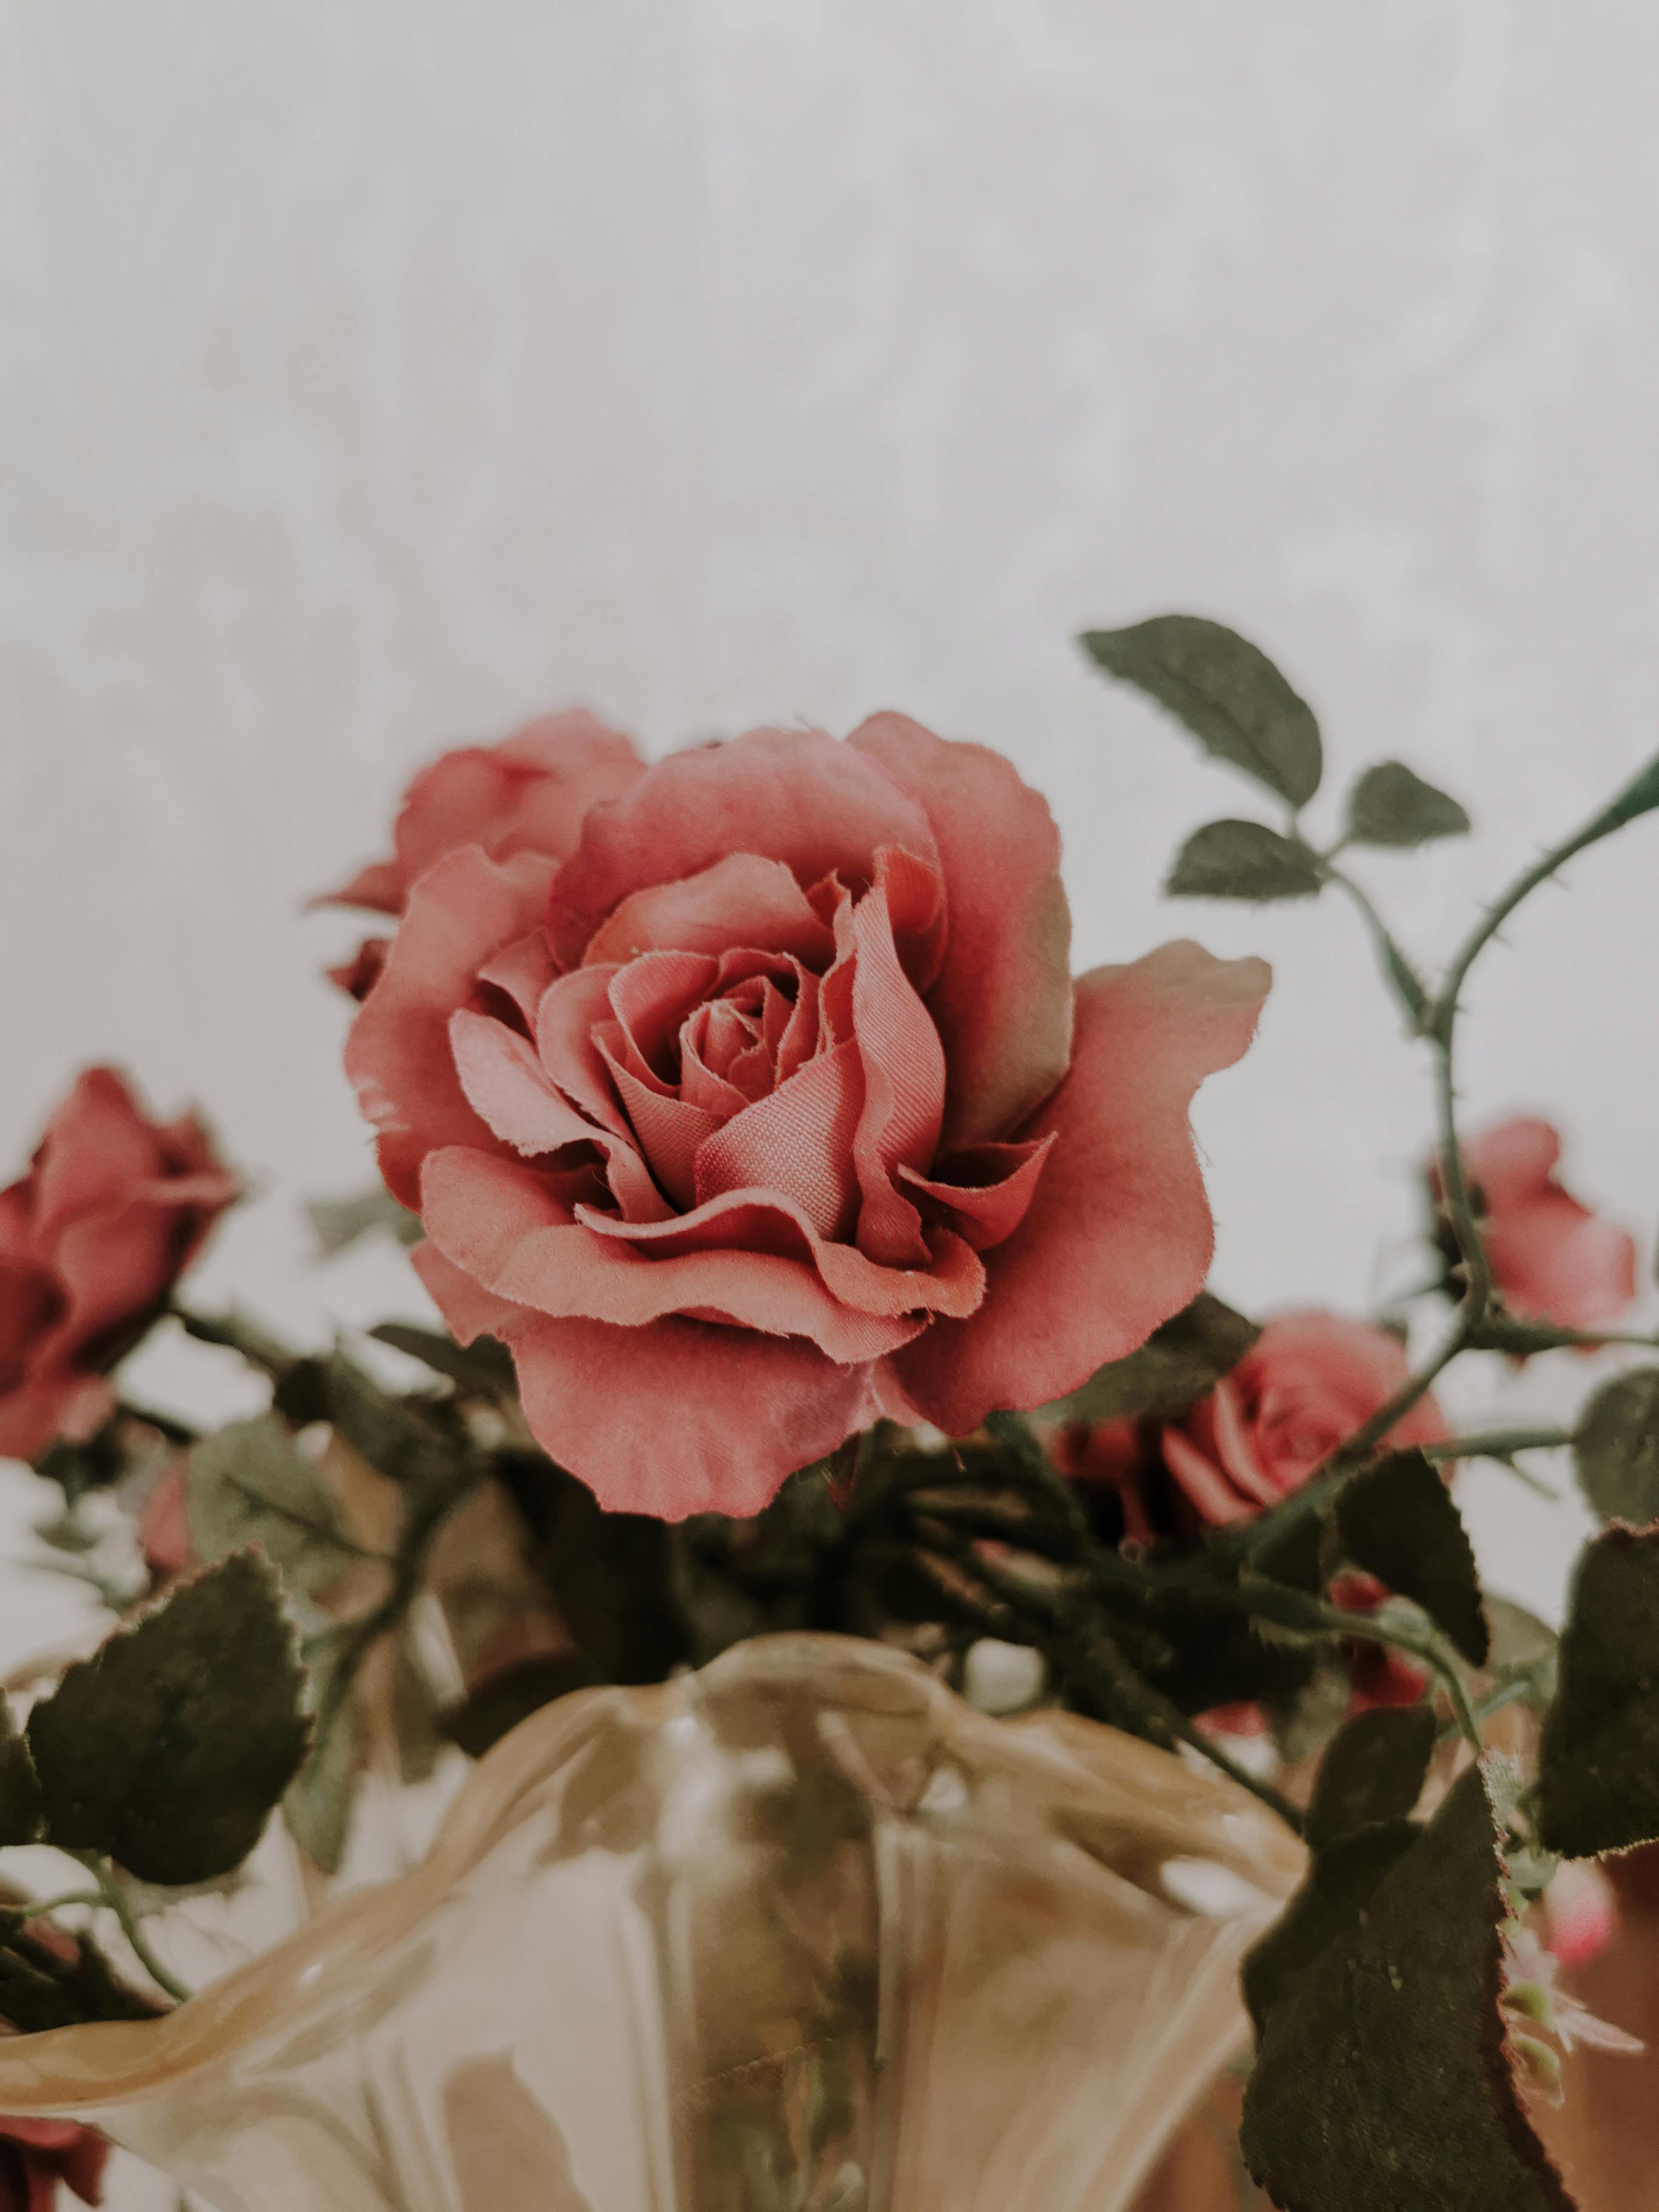 roses tumblr background